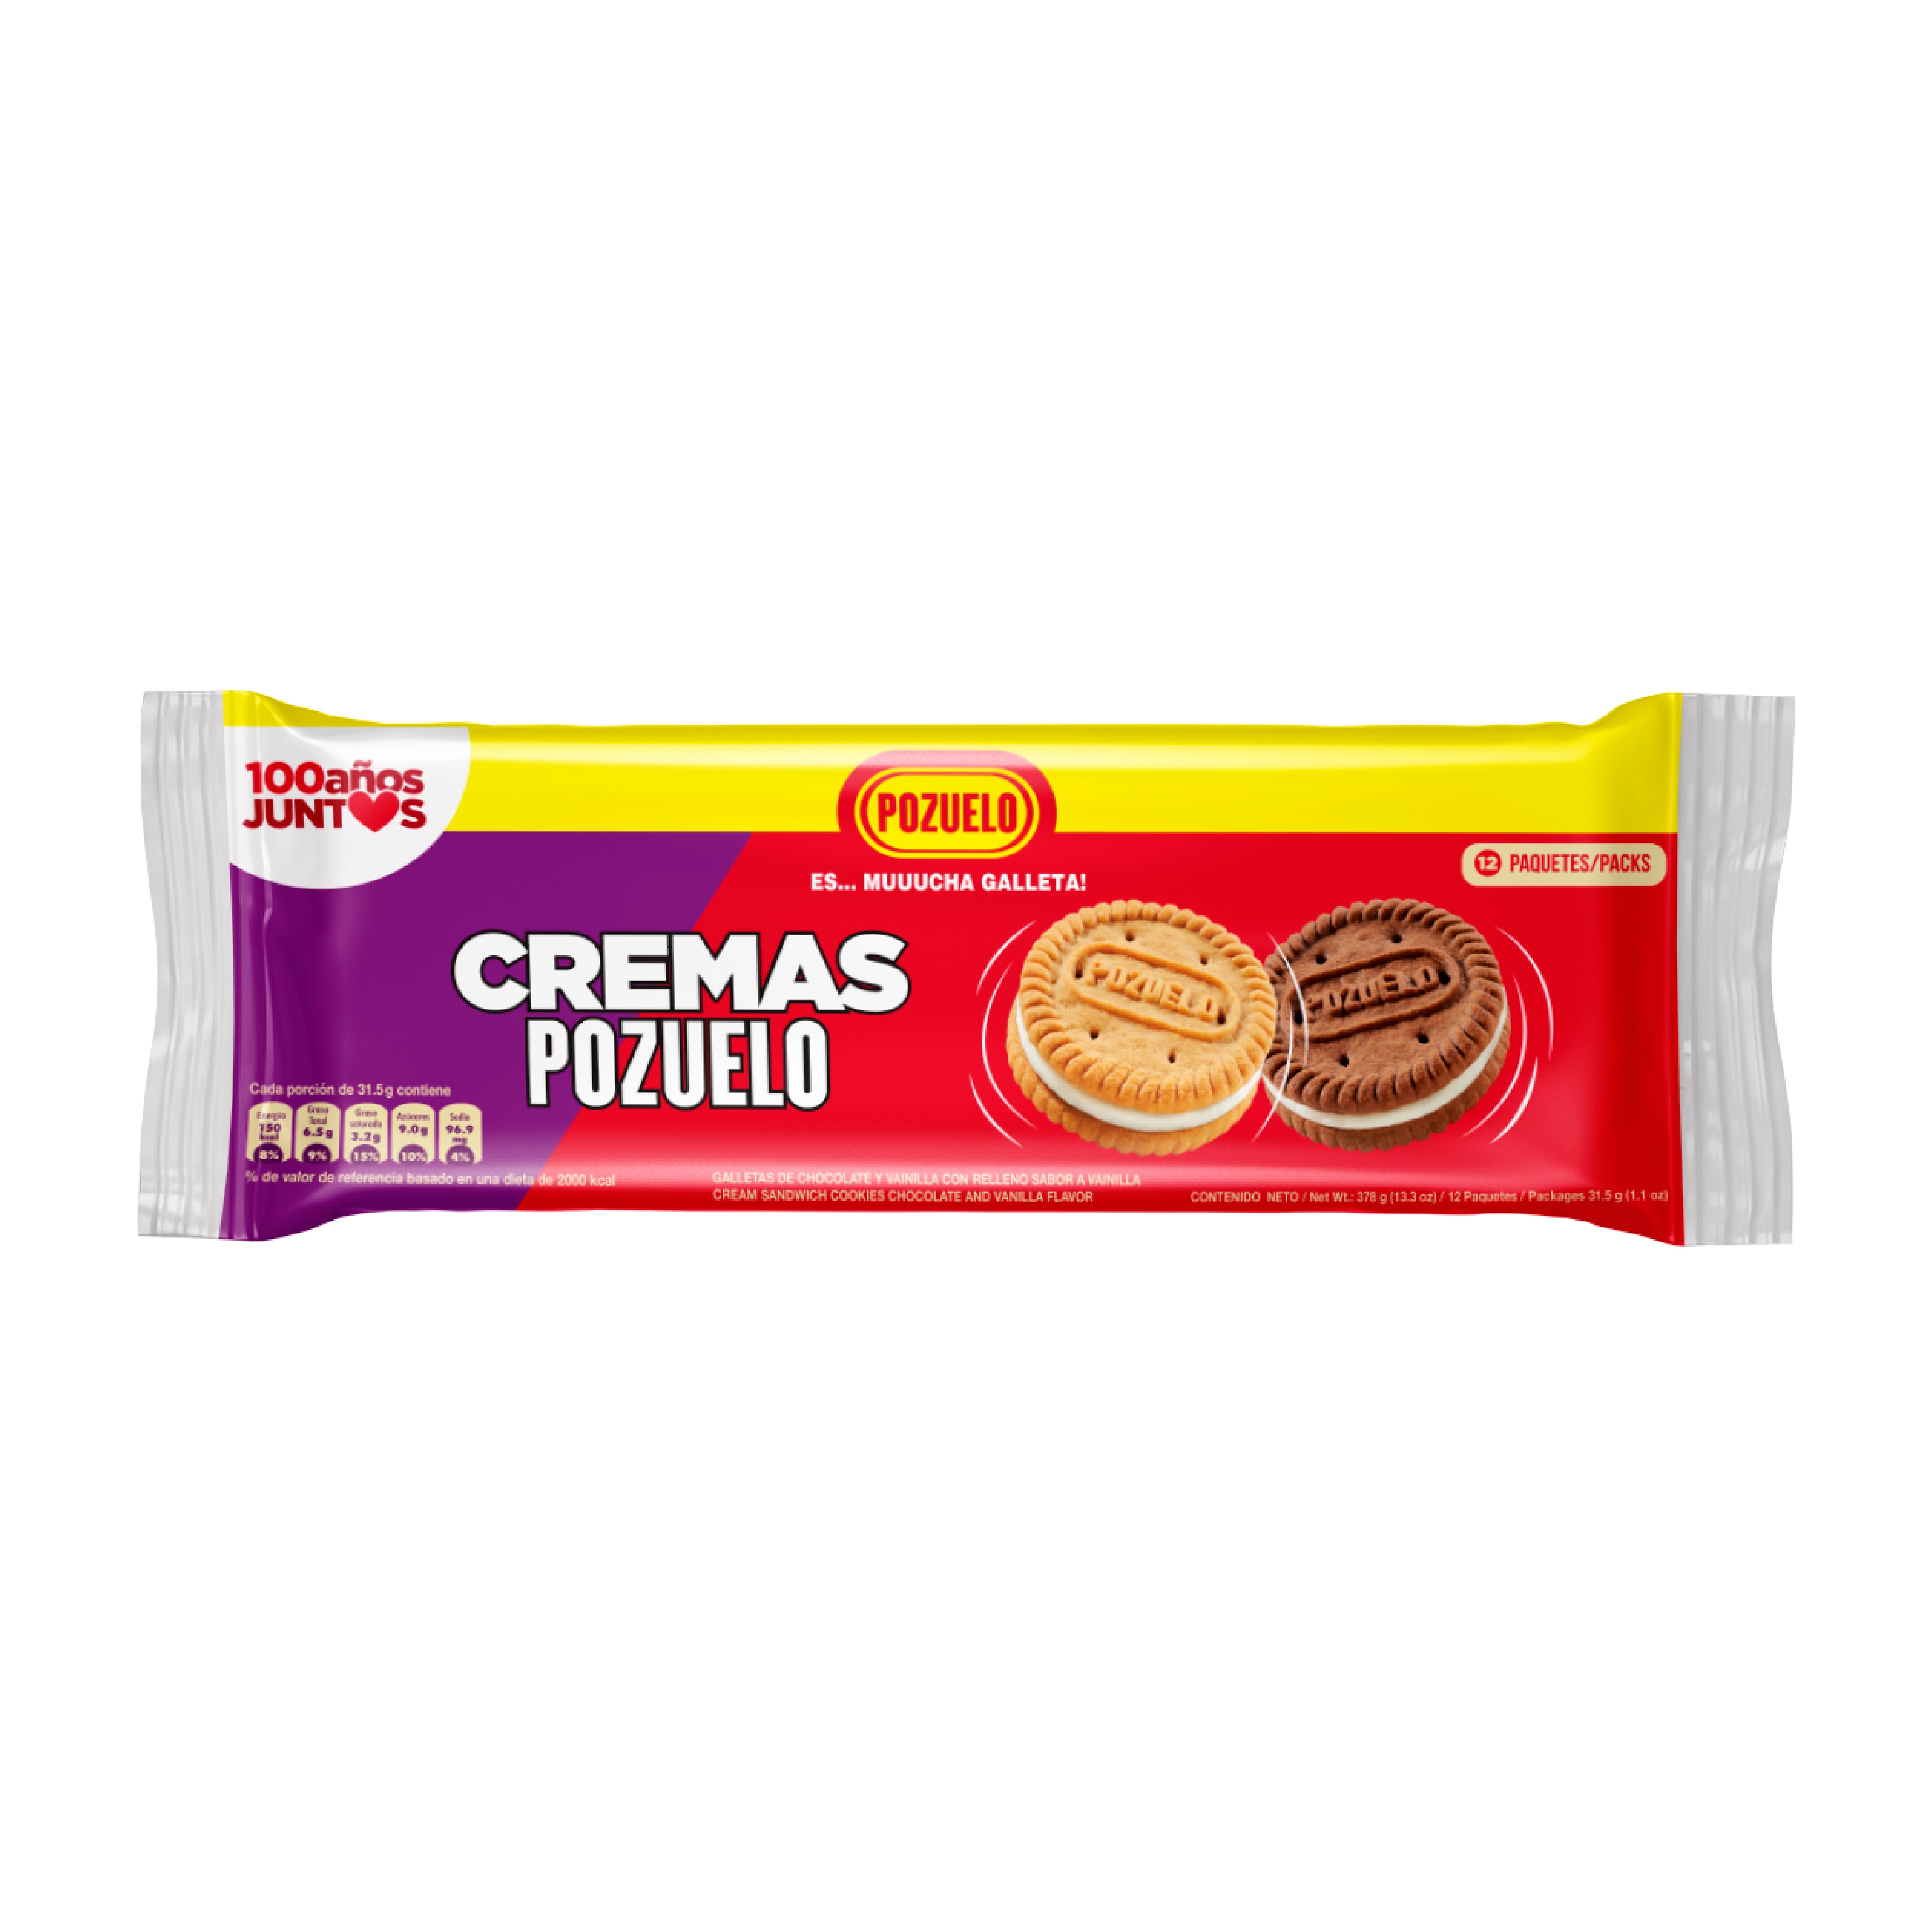 Cremas Pozuelo Mixed, Chocolate-Vanilla, Bag, 13.3 Oz, 12 ct